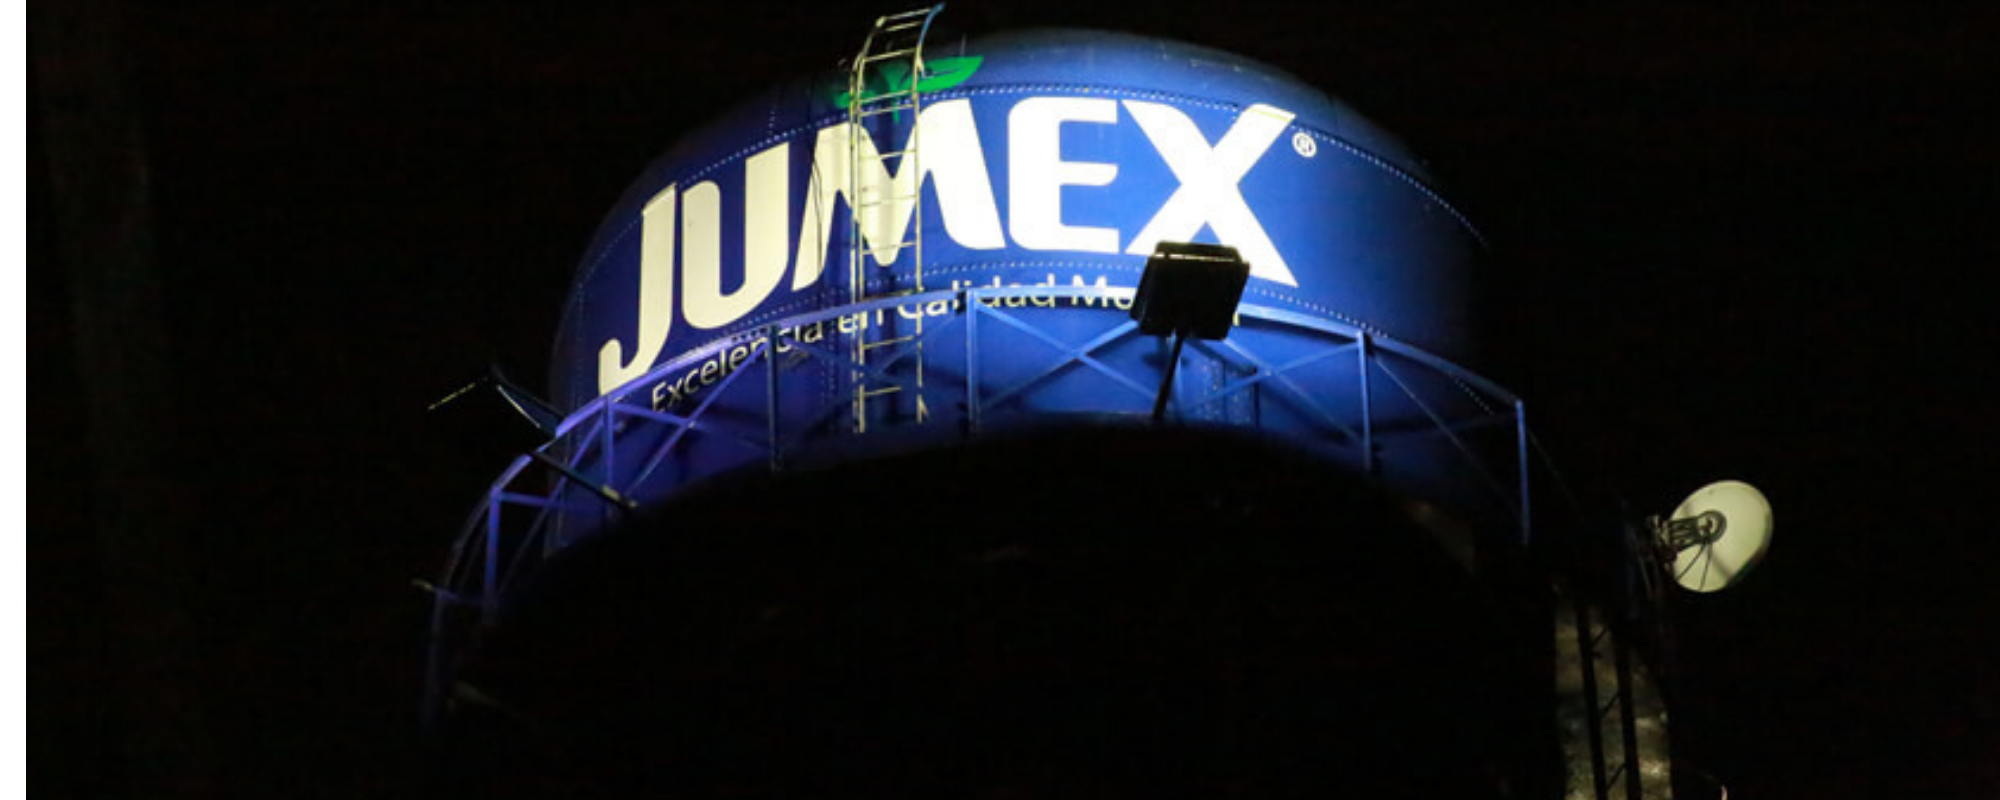 bolsa de trabajo Jumex